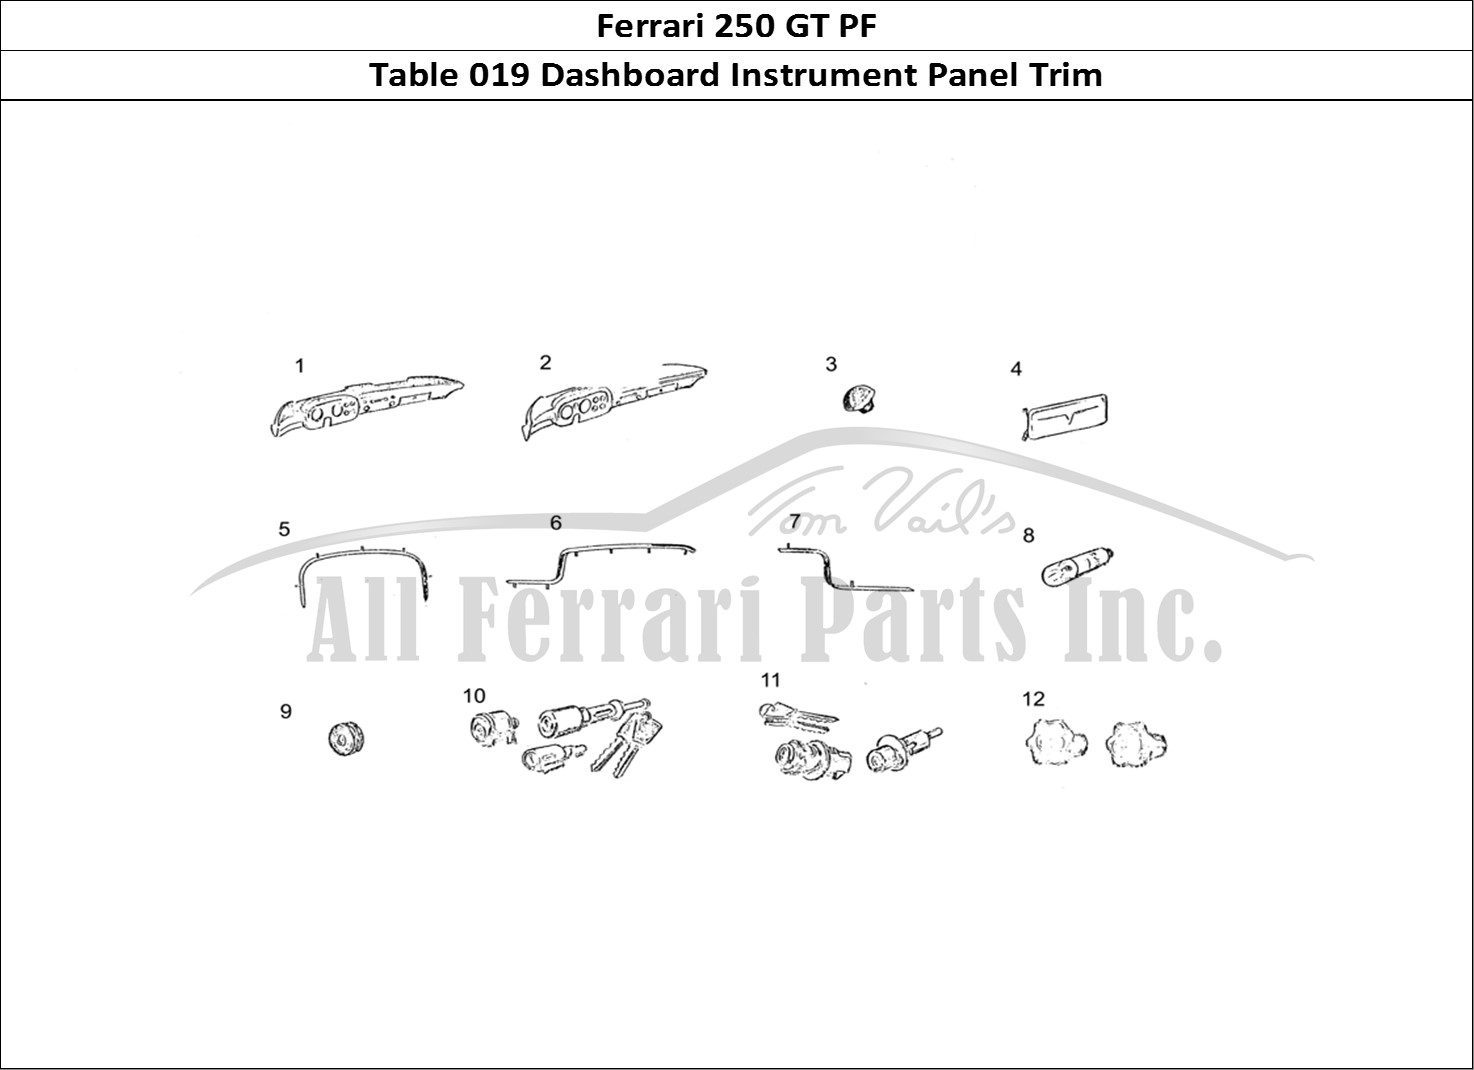 Ferrari Parts Ferrari 250 GT (Coachwork) Page 019 Dashboard Trim